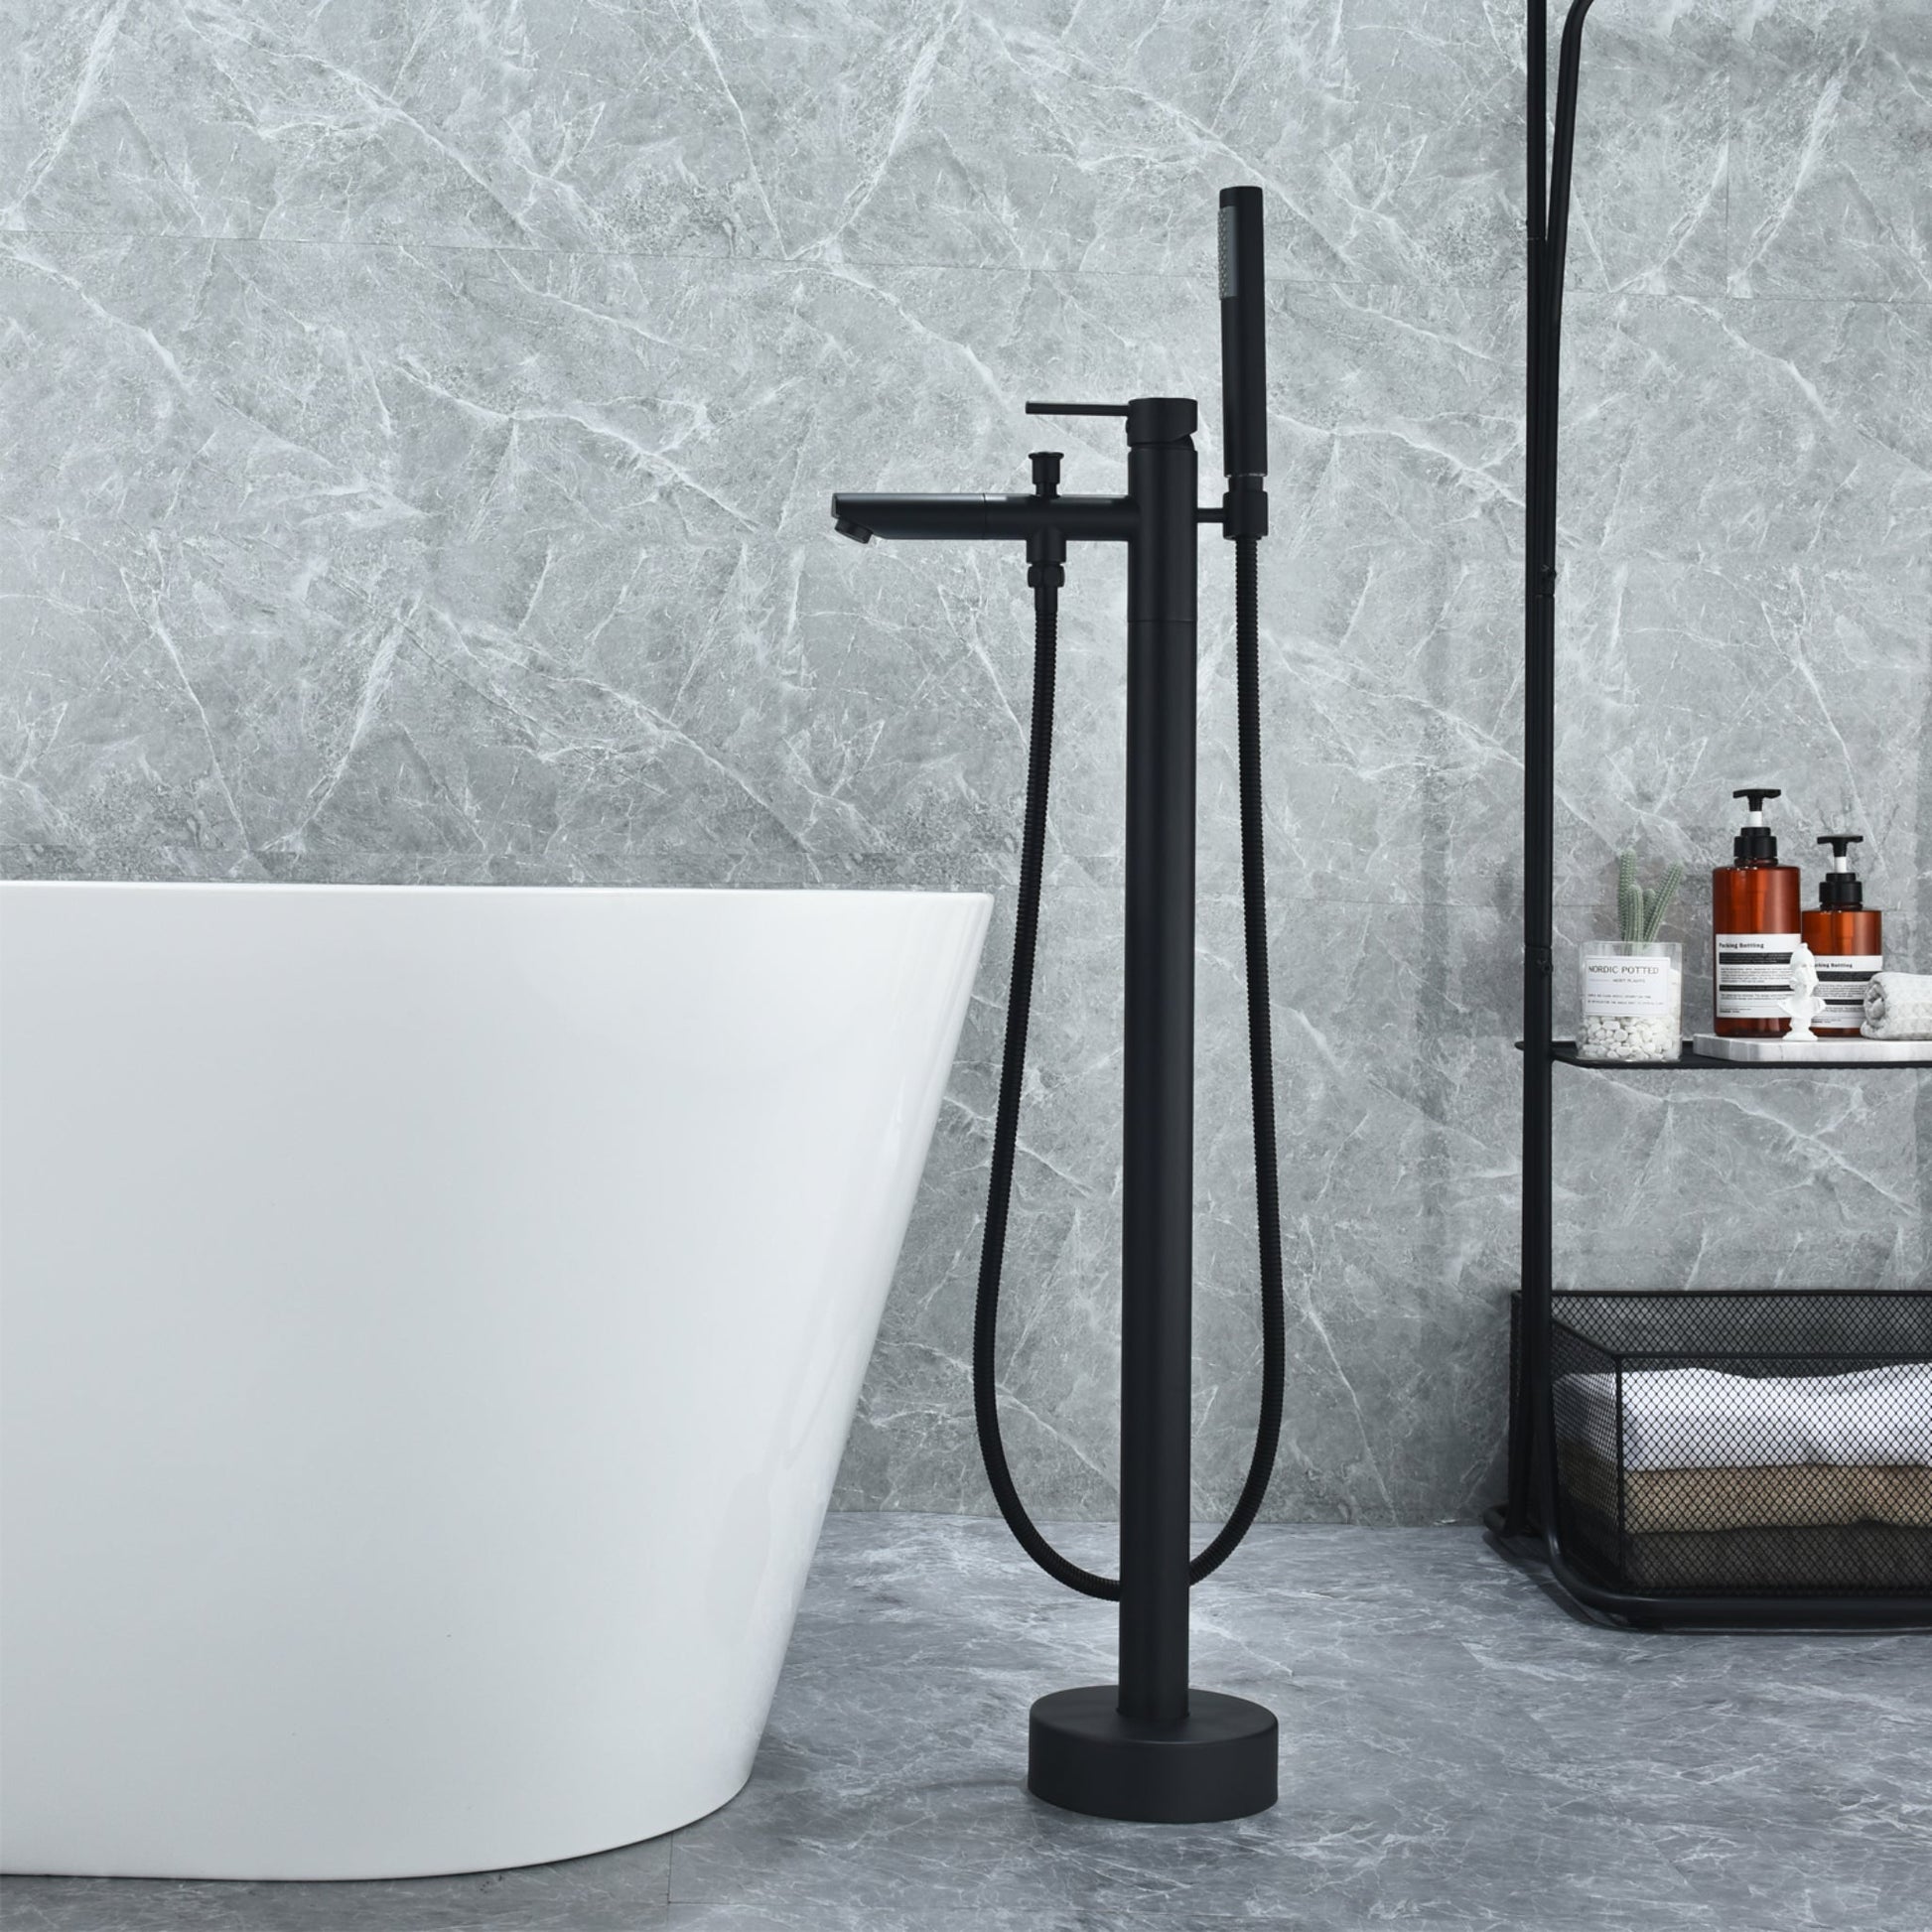 Altair Larod Matte Black Single Lever Handle Freestanding Bathtub Faucet With Handshower